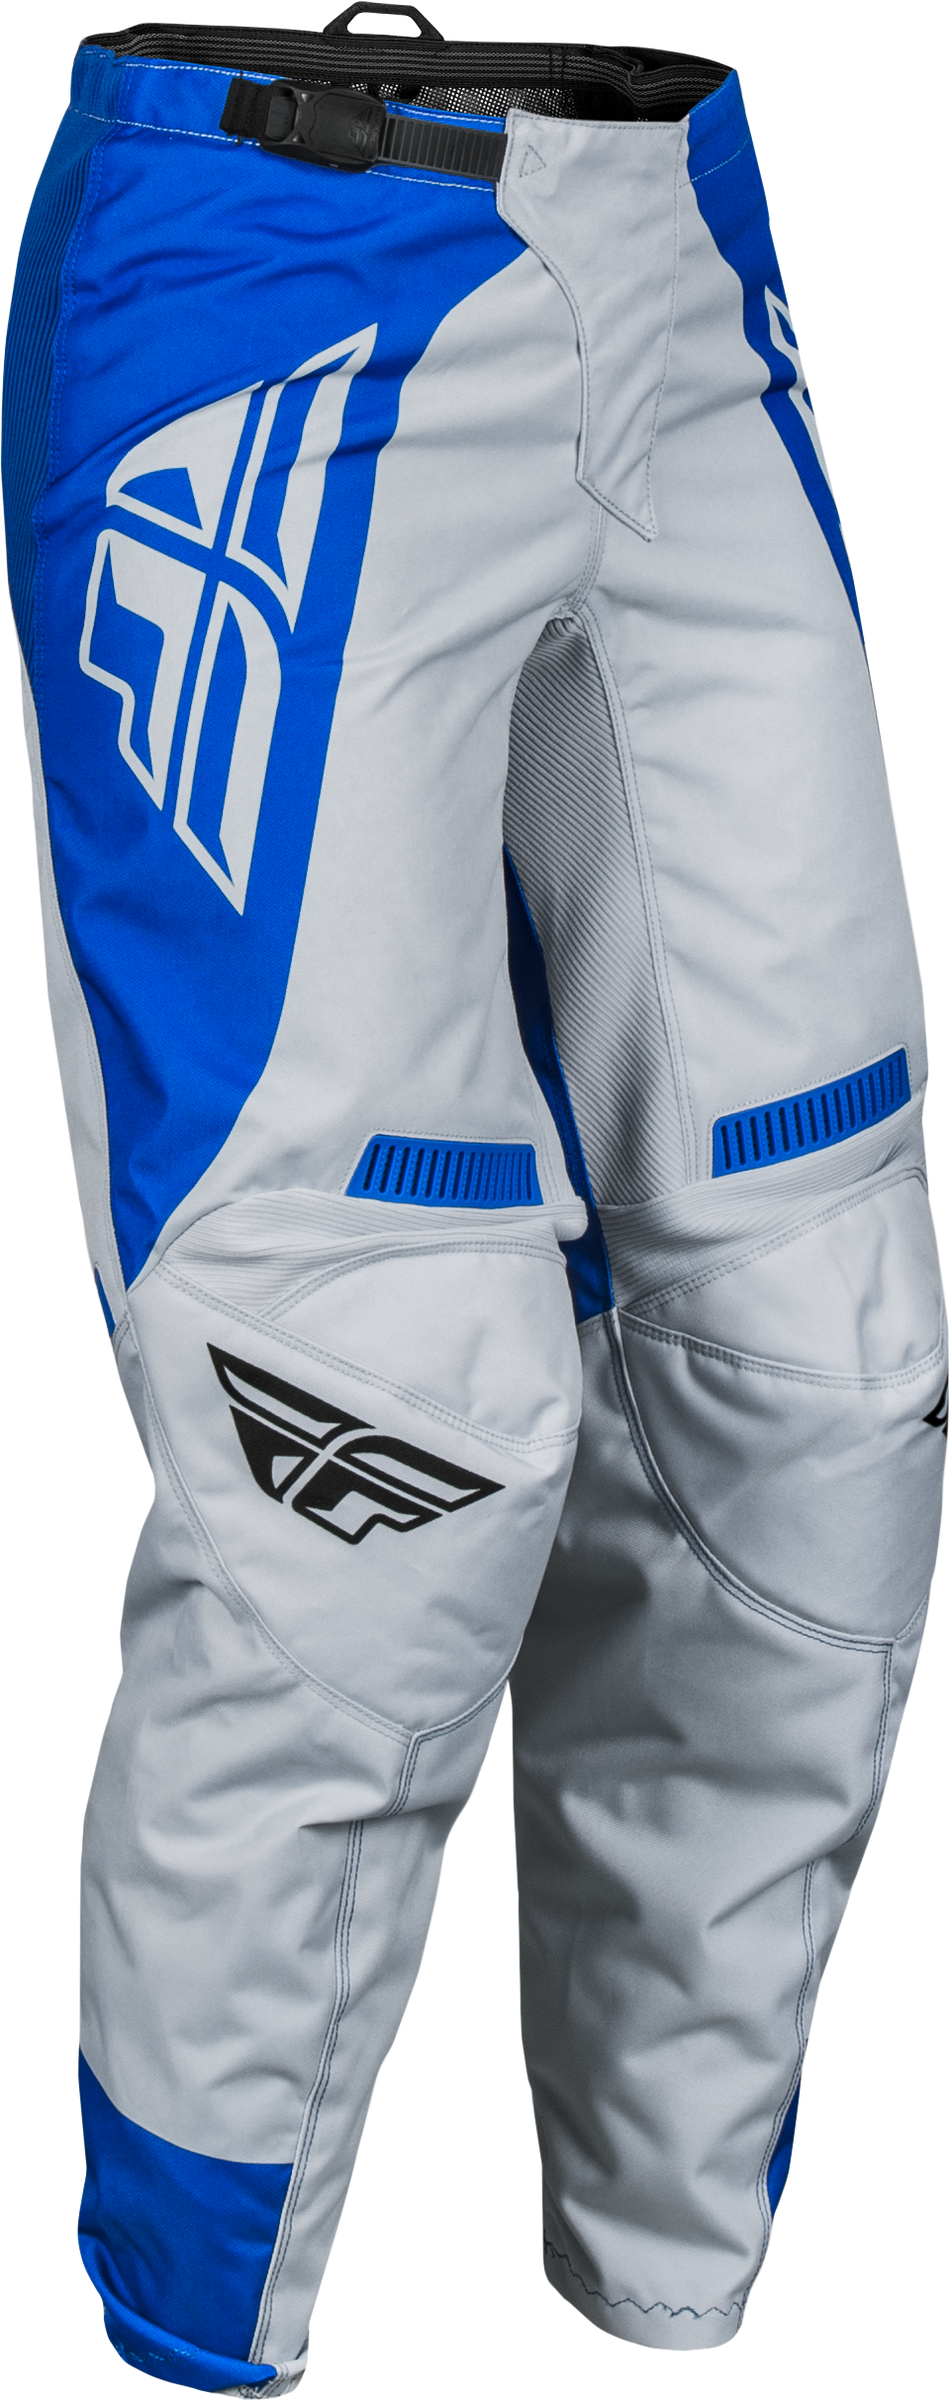 FLY RACING Women's F-16 Pants Arctic Grey/Blue Sz 07/08 377-83007